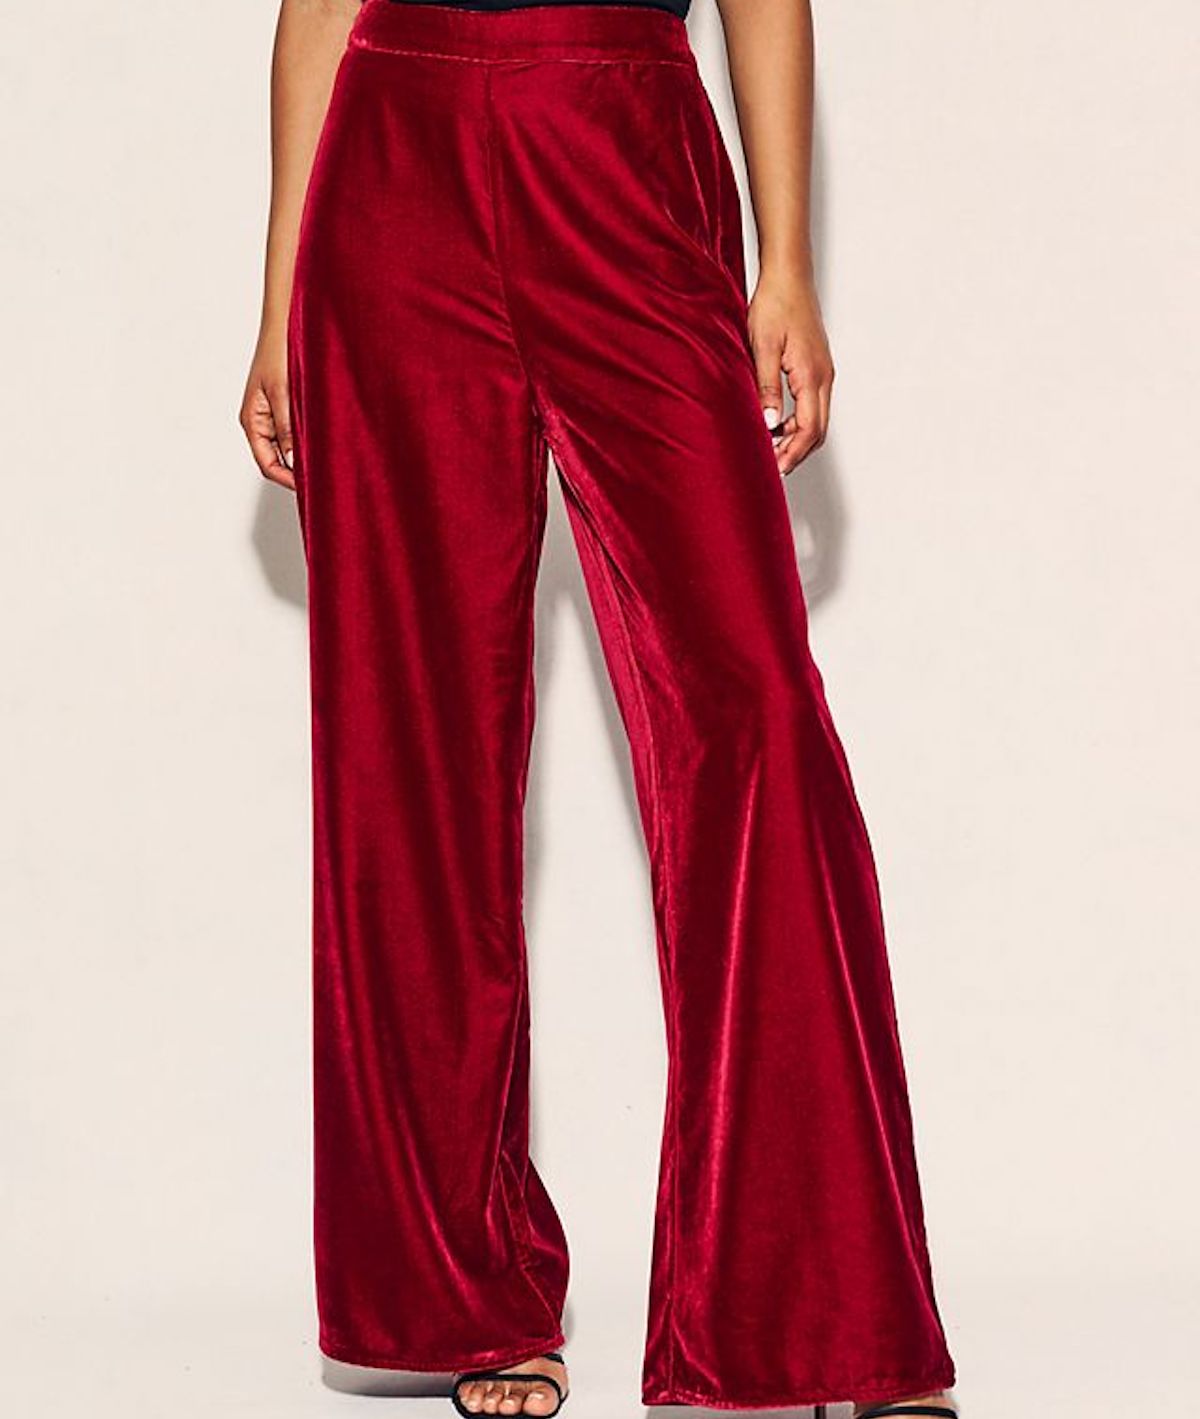 Red velvet wide-leg trousers modelled against a peach backdrop. Women's party wear ideas on Silver